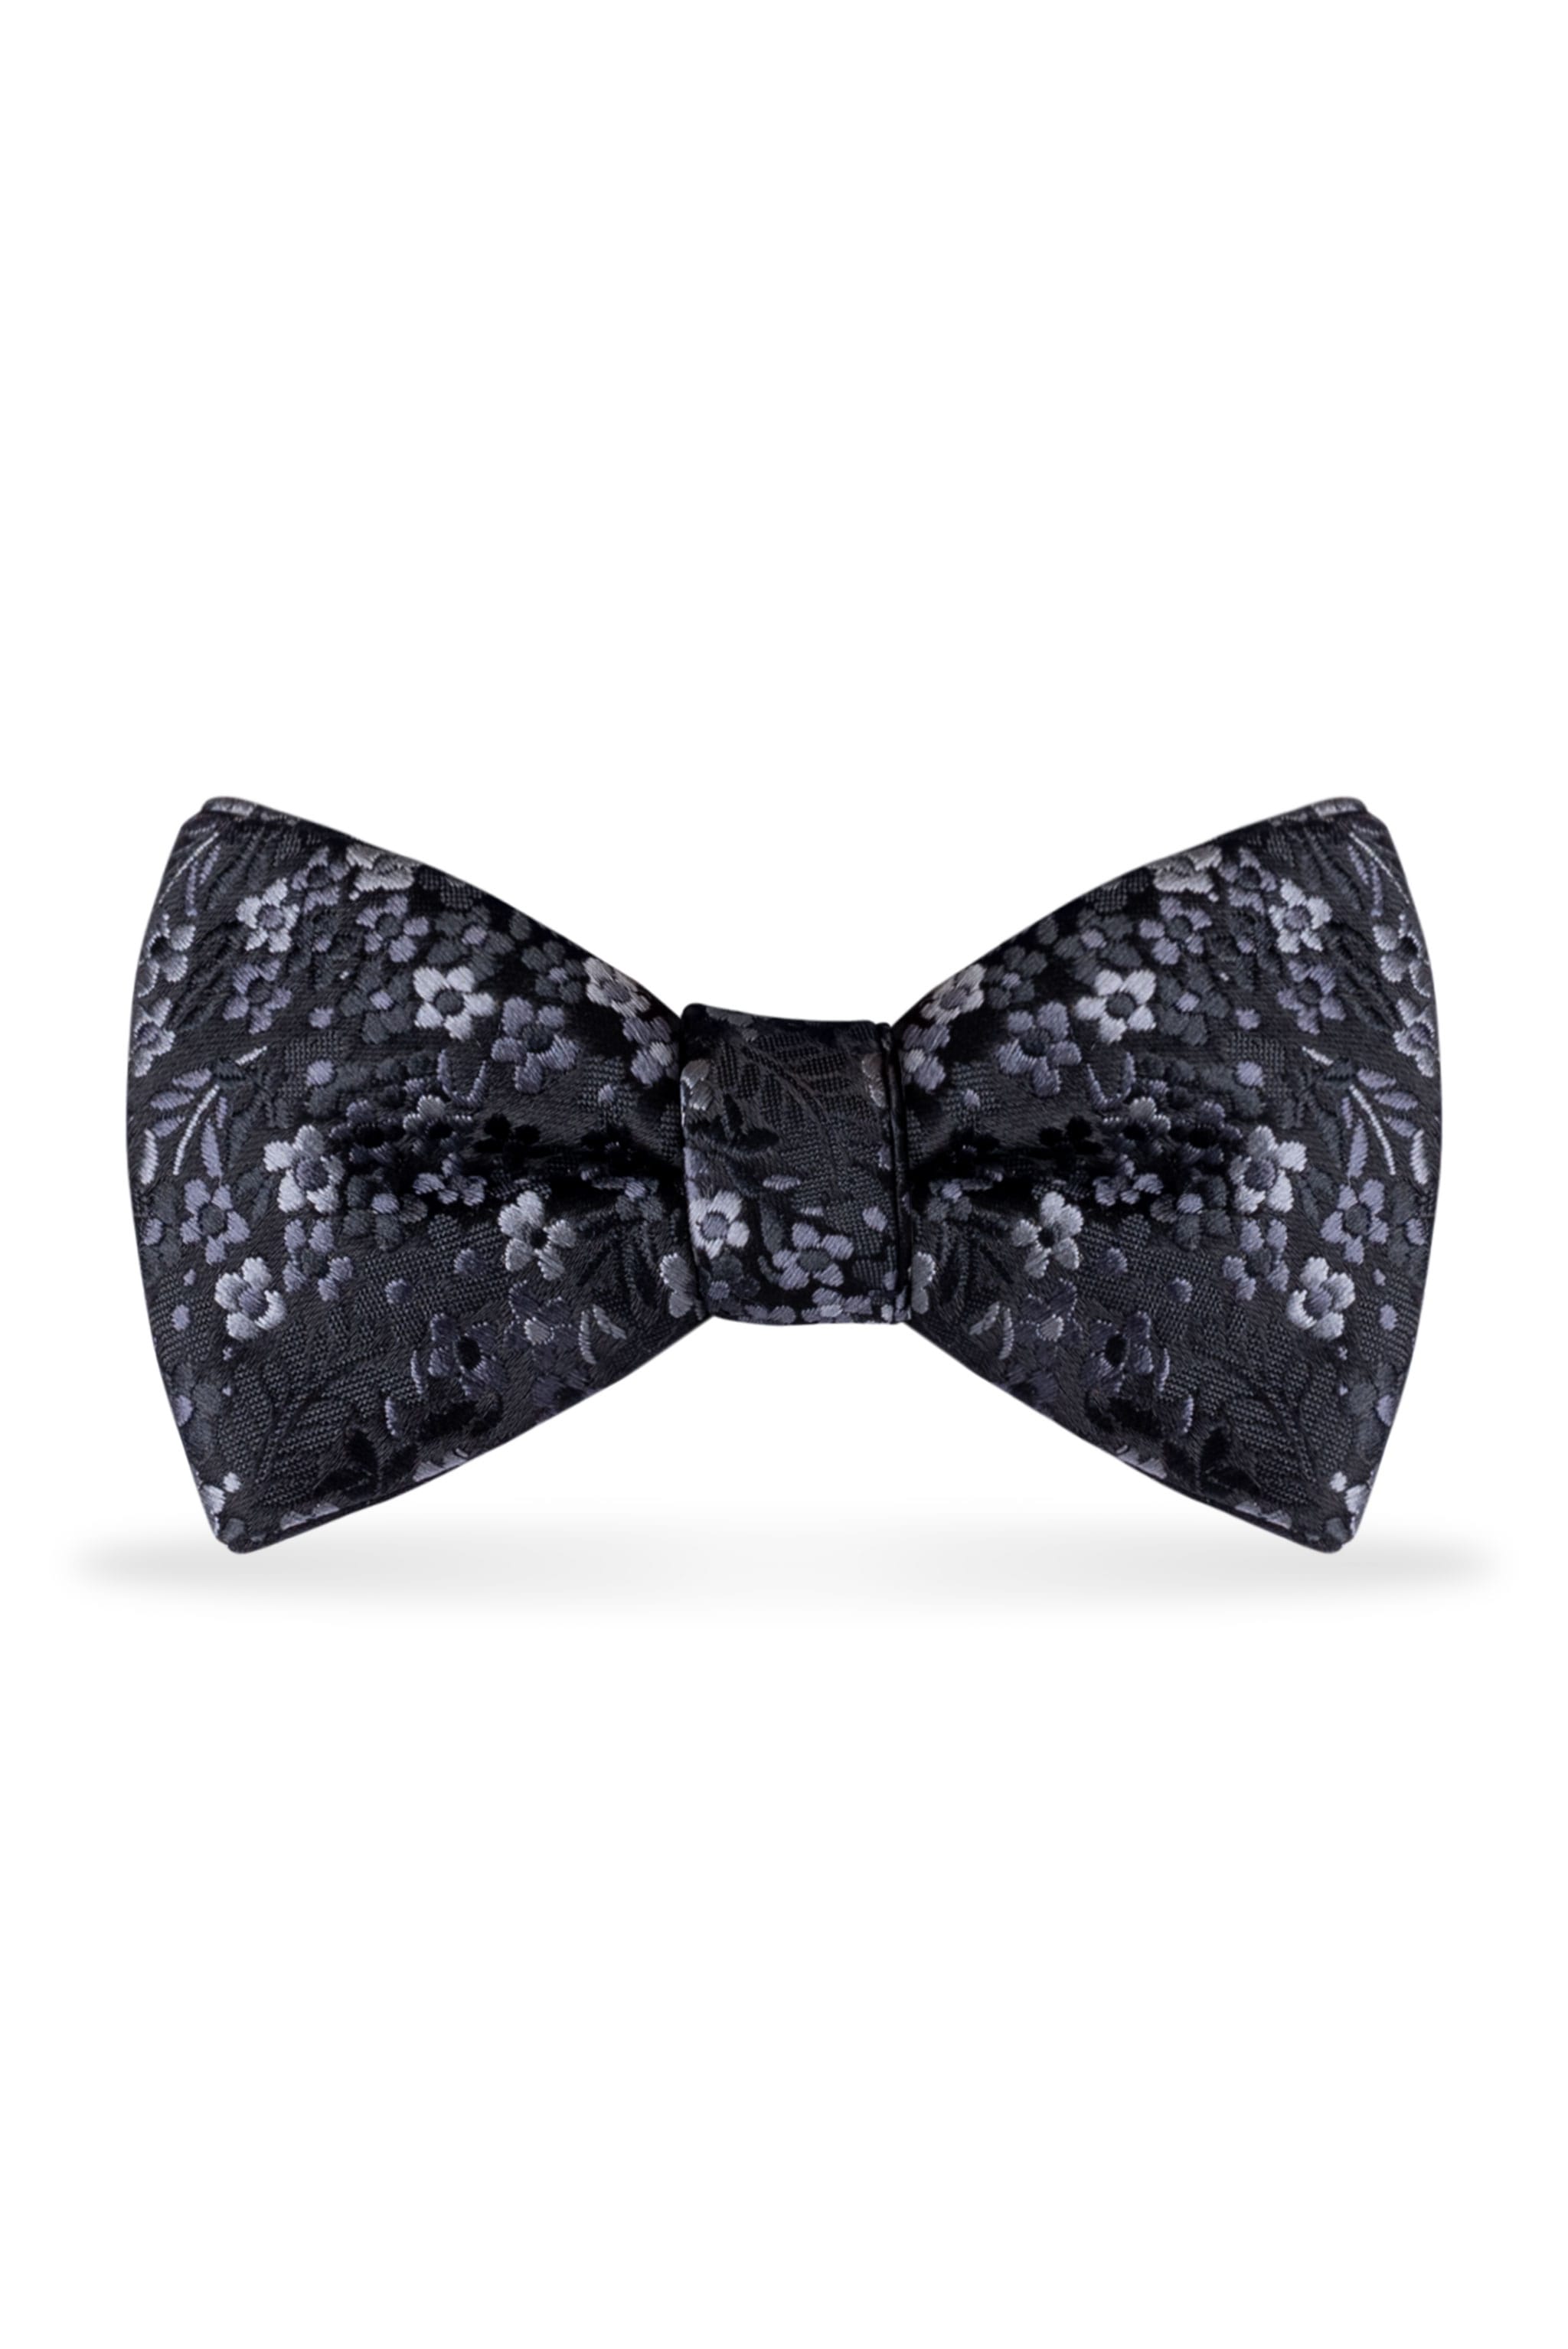 Floral Black Bow Tie